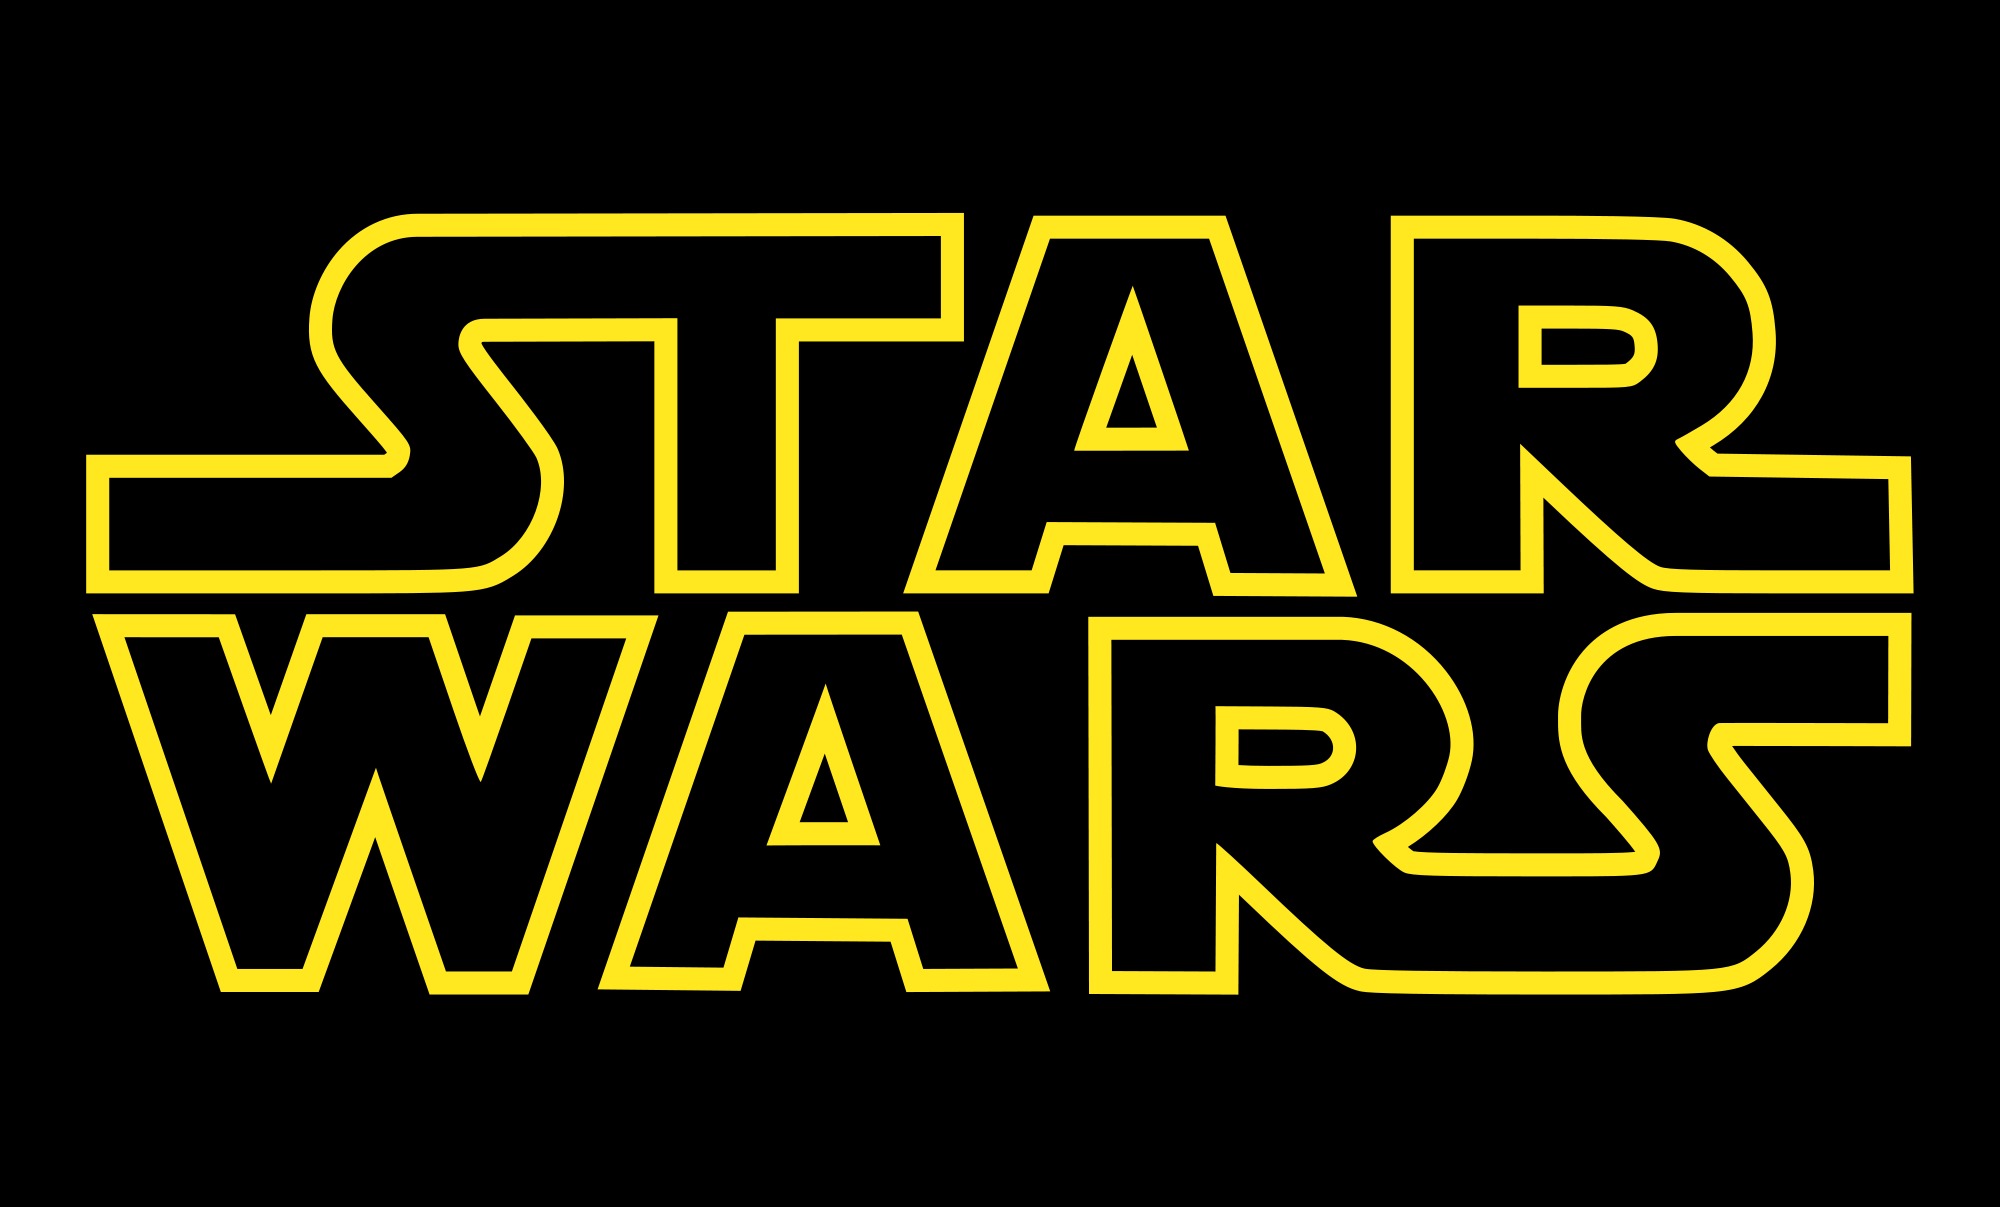 Mark Hamill's co-star tells of wild, drunken night with 'Star Wars' icon